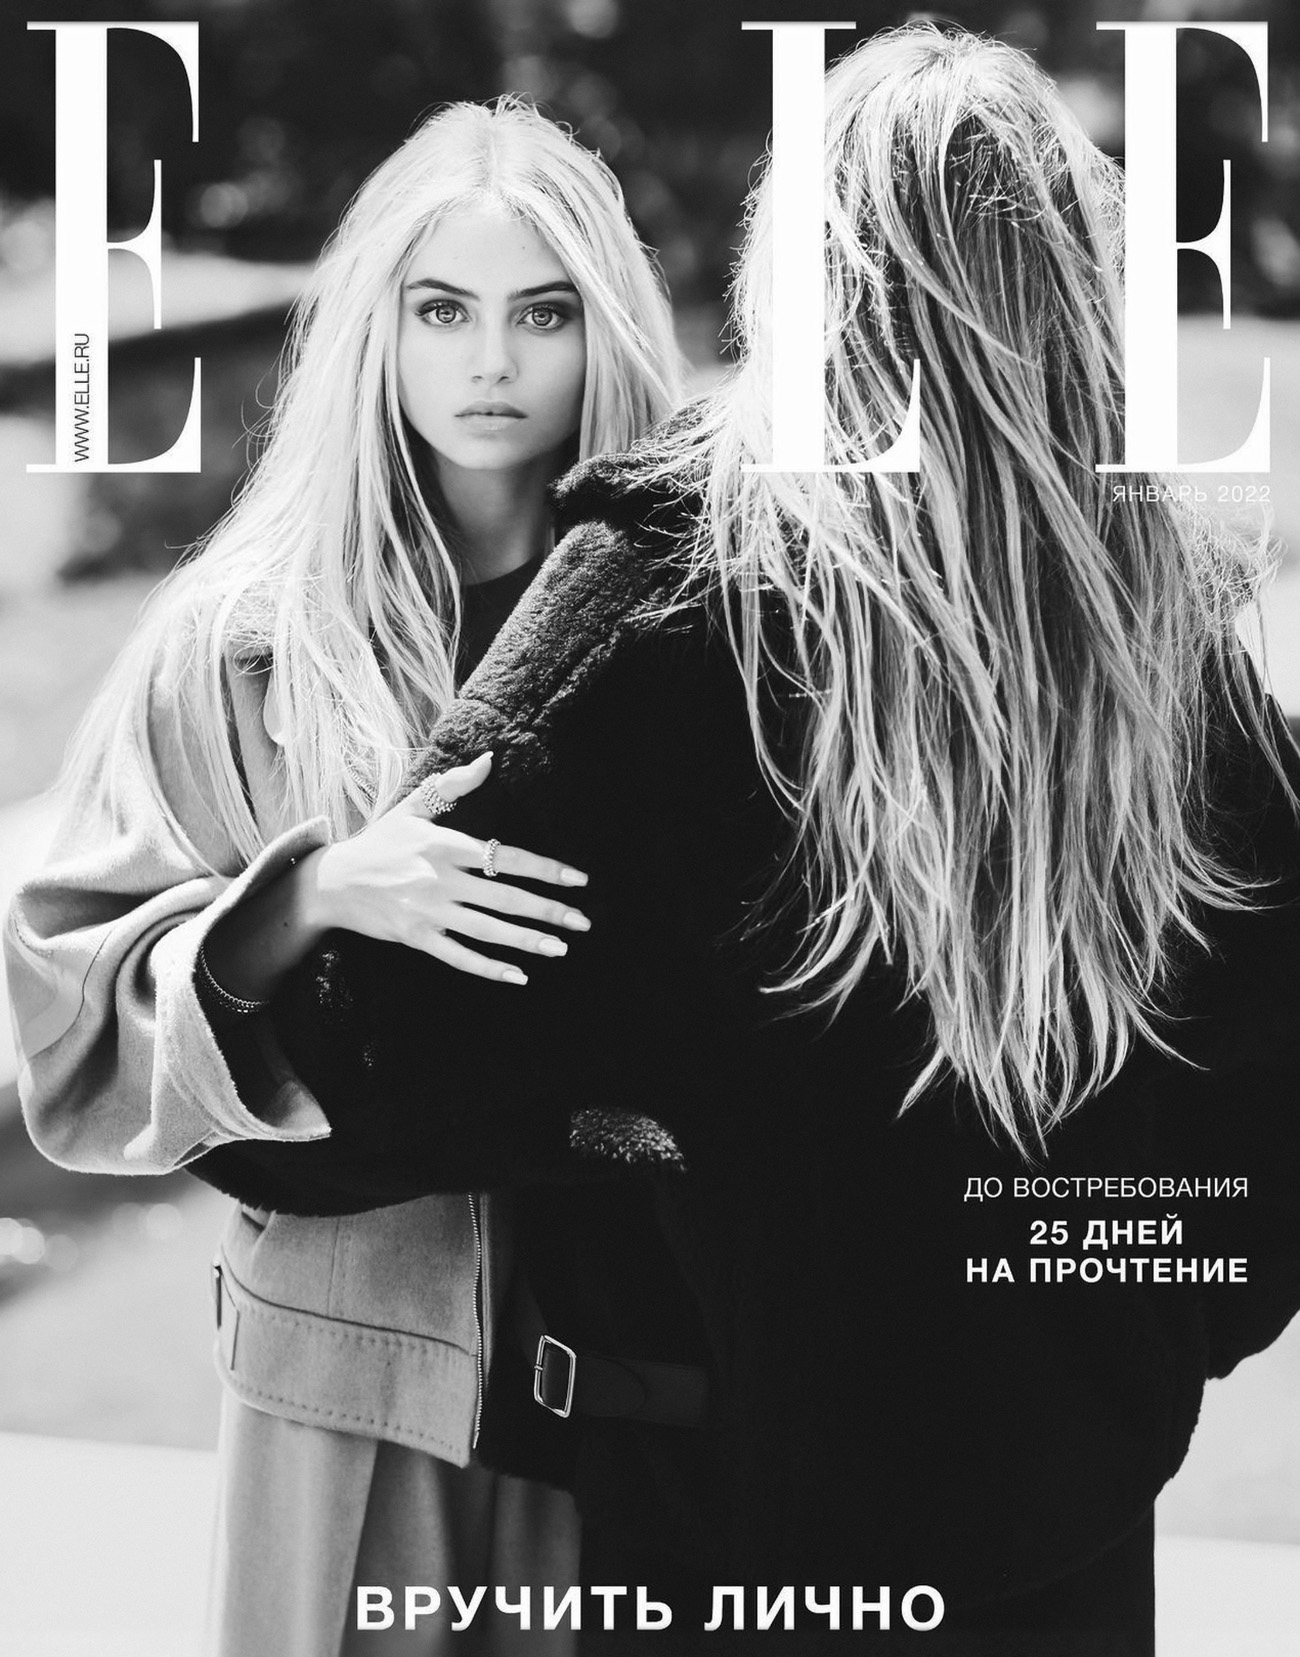 Heidi Klum and Leni Klum cover Elle Russia January 2022 by Robert Erdmann